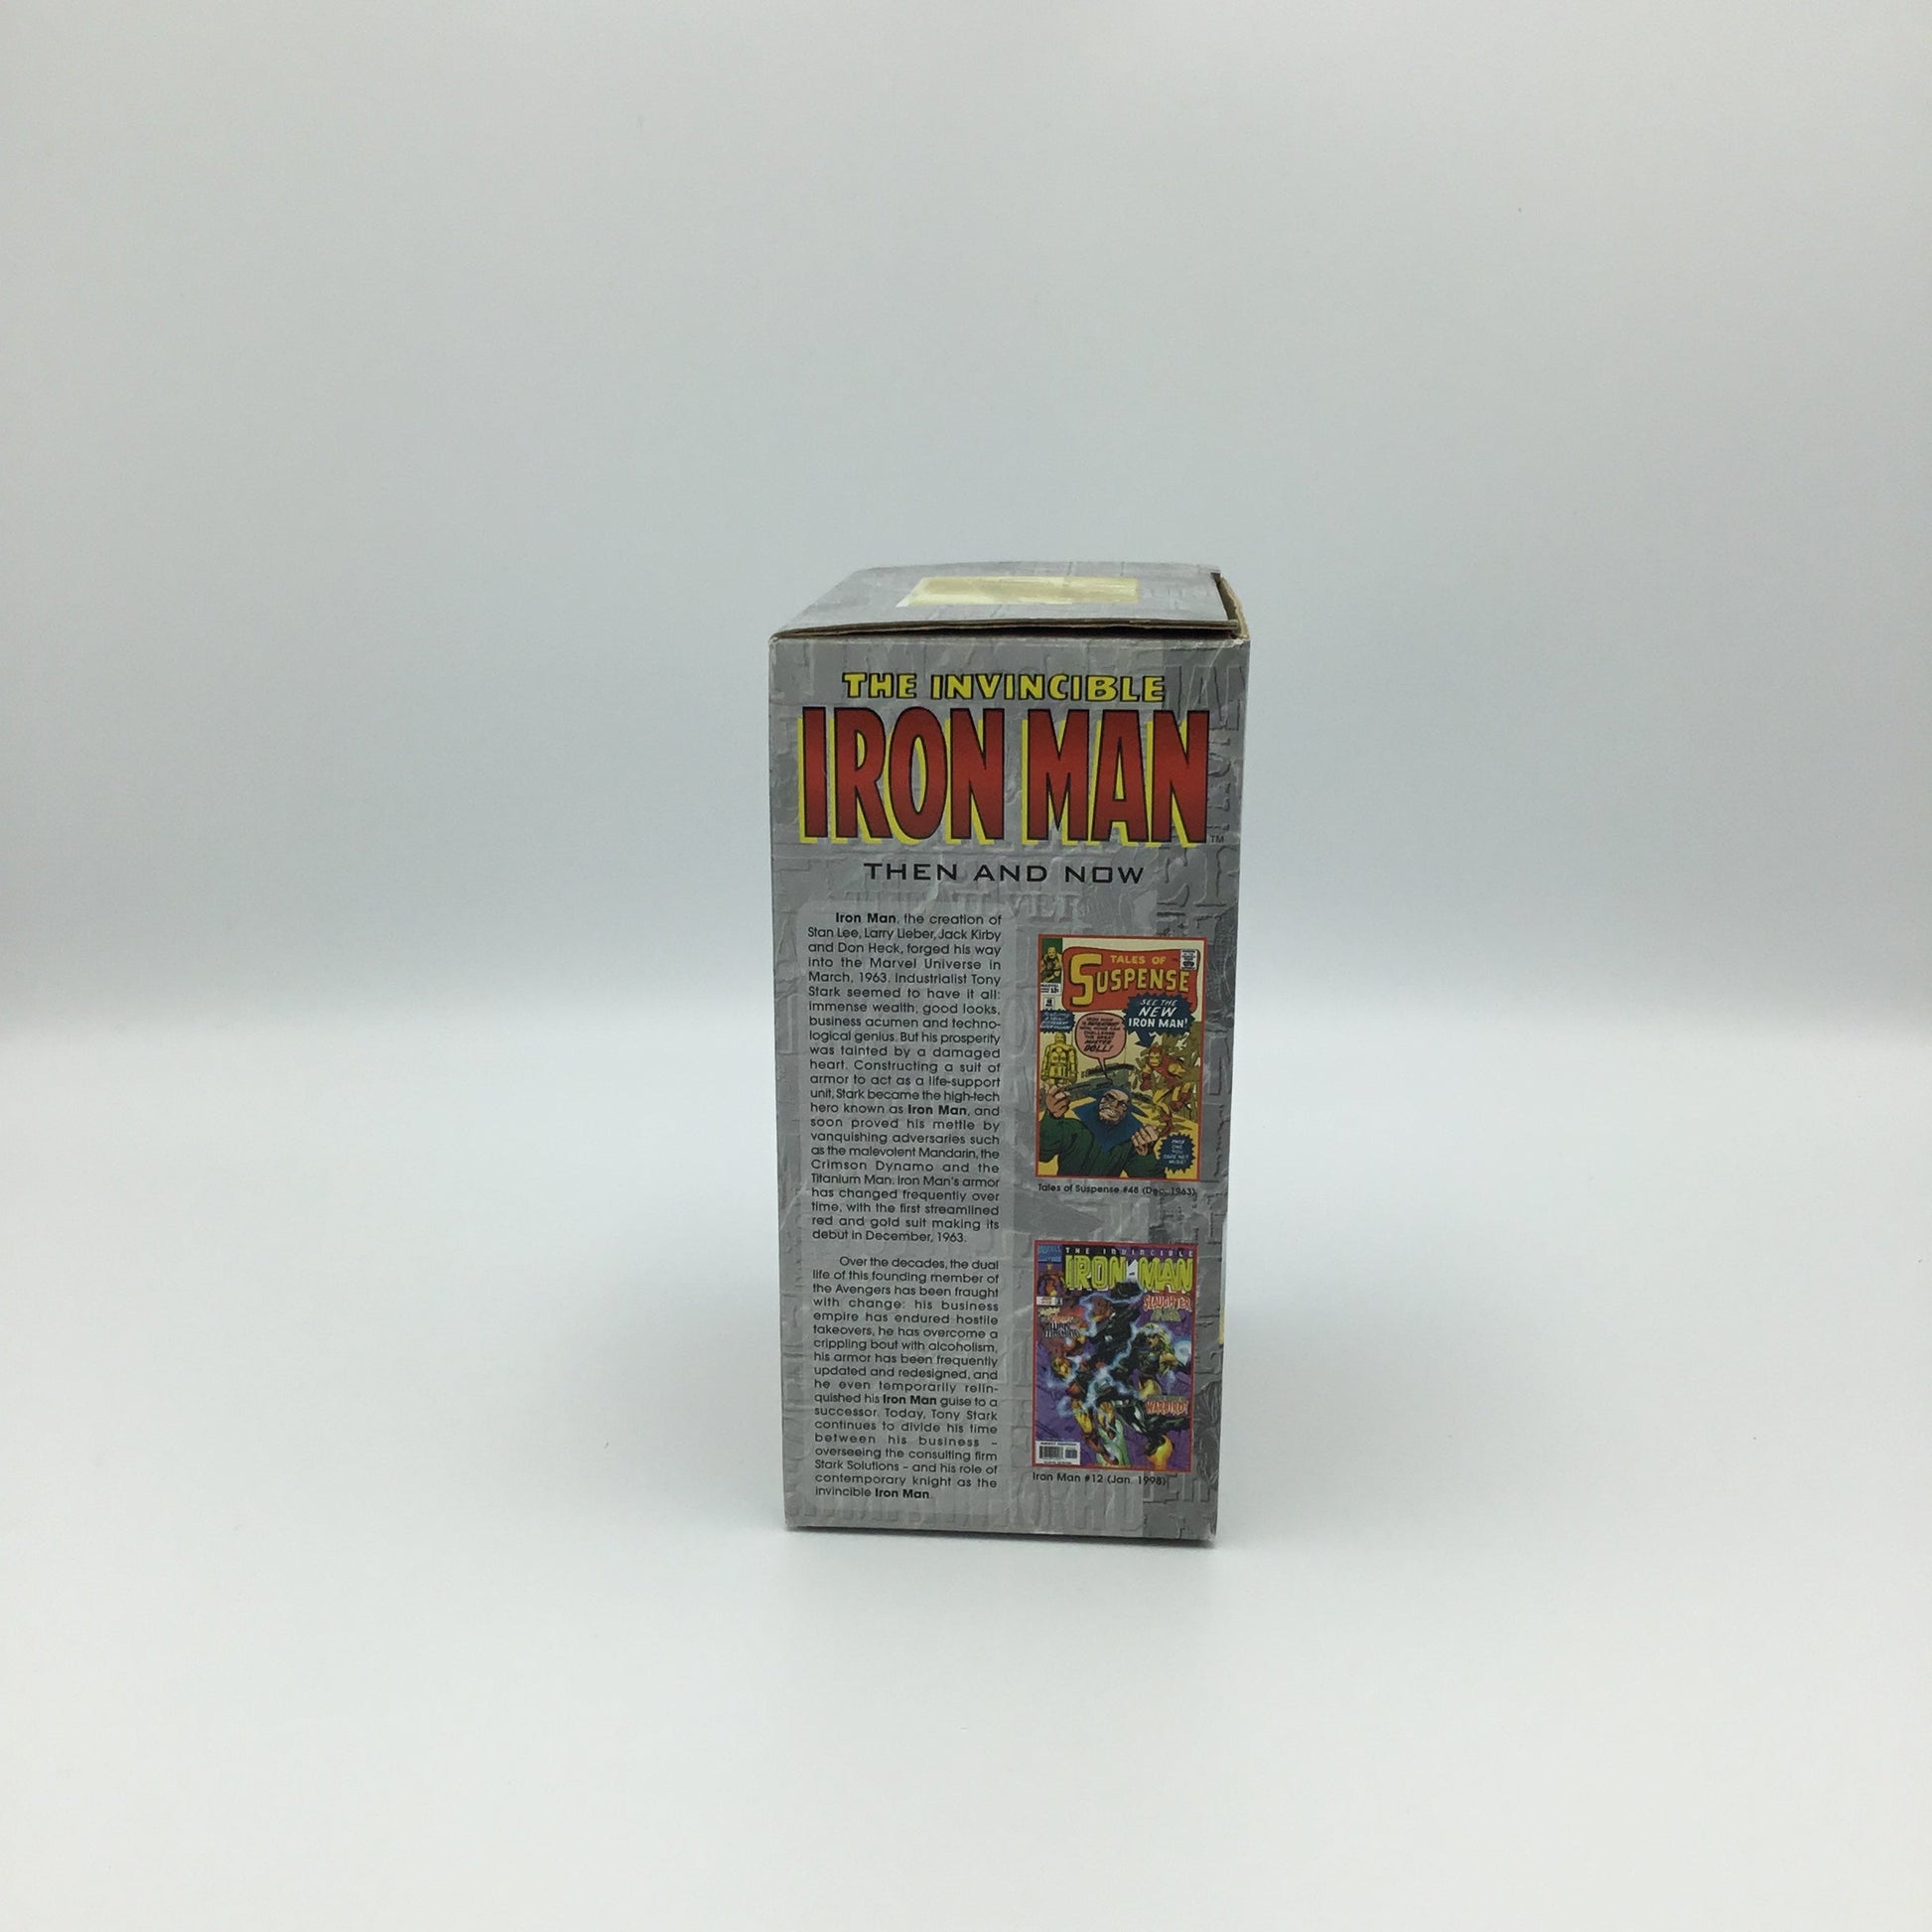 Silver Age Iron Man Mini-Bust - Randy Bowen Designs Marvel - 3143/4000